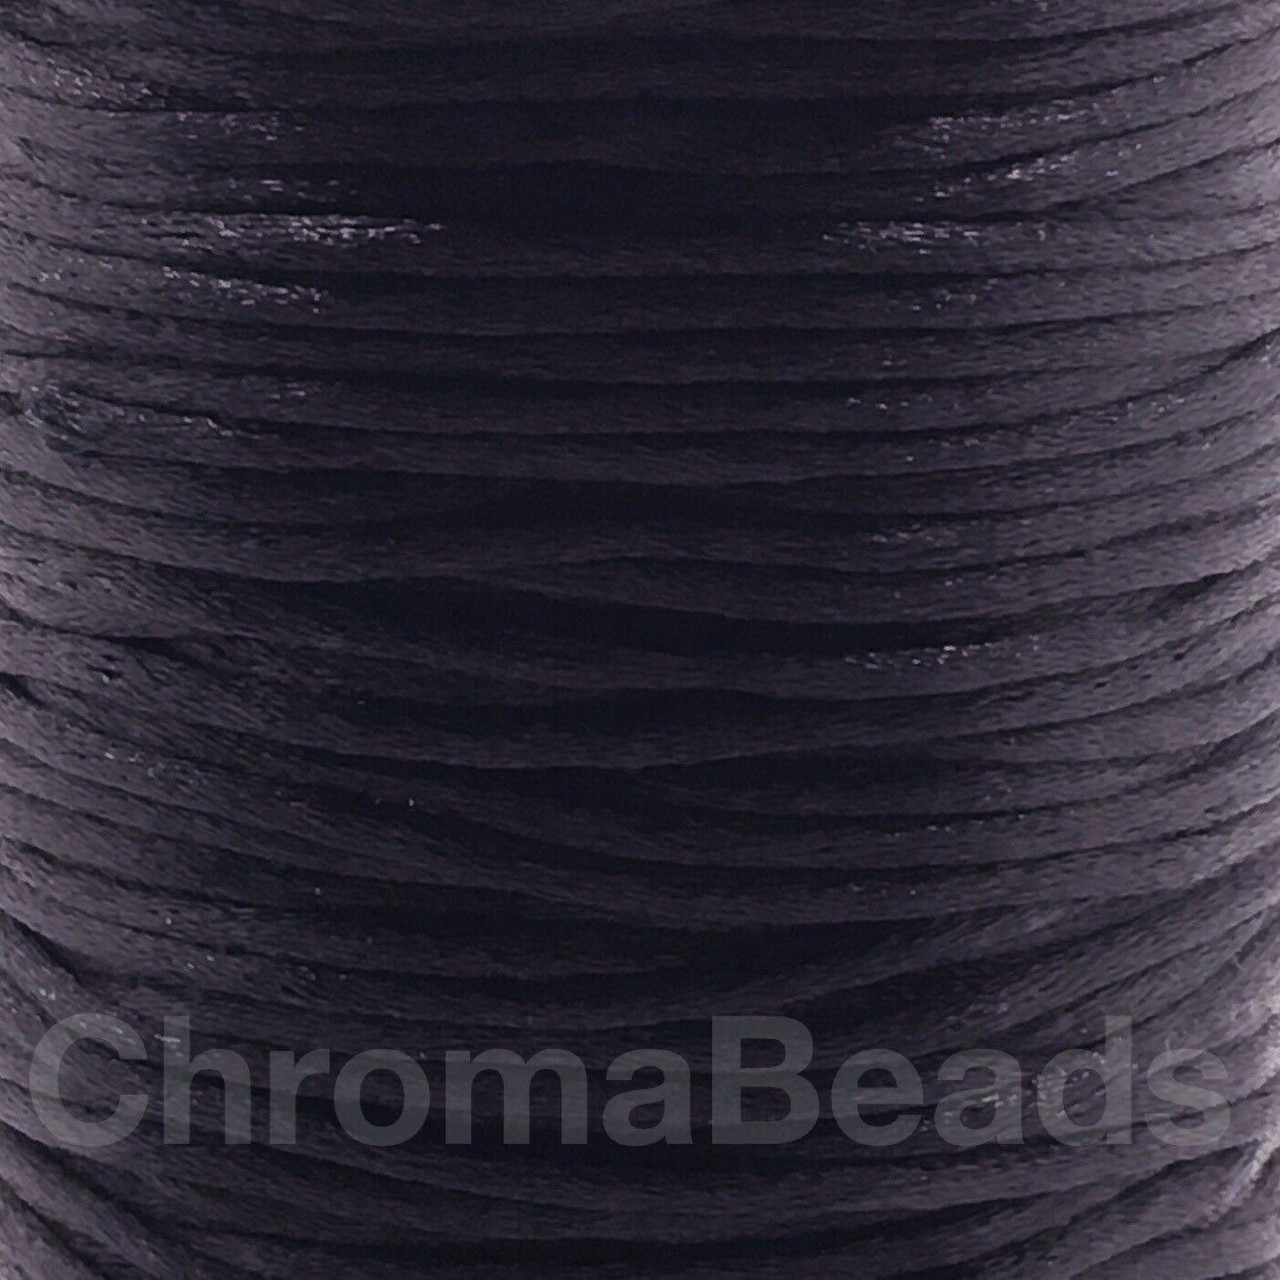 2x Reels of Nylon Cord (Rattail) - Black, approx 45m each